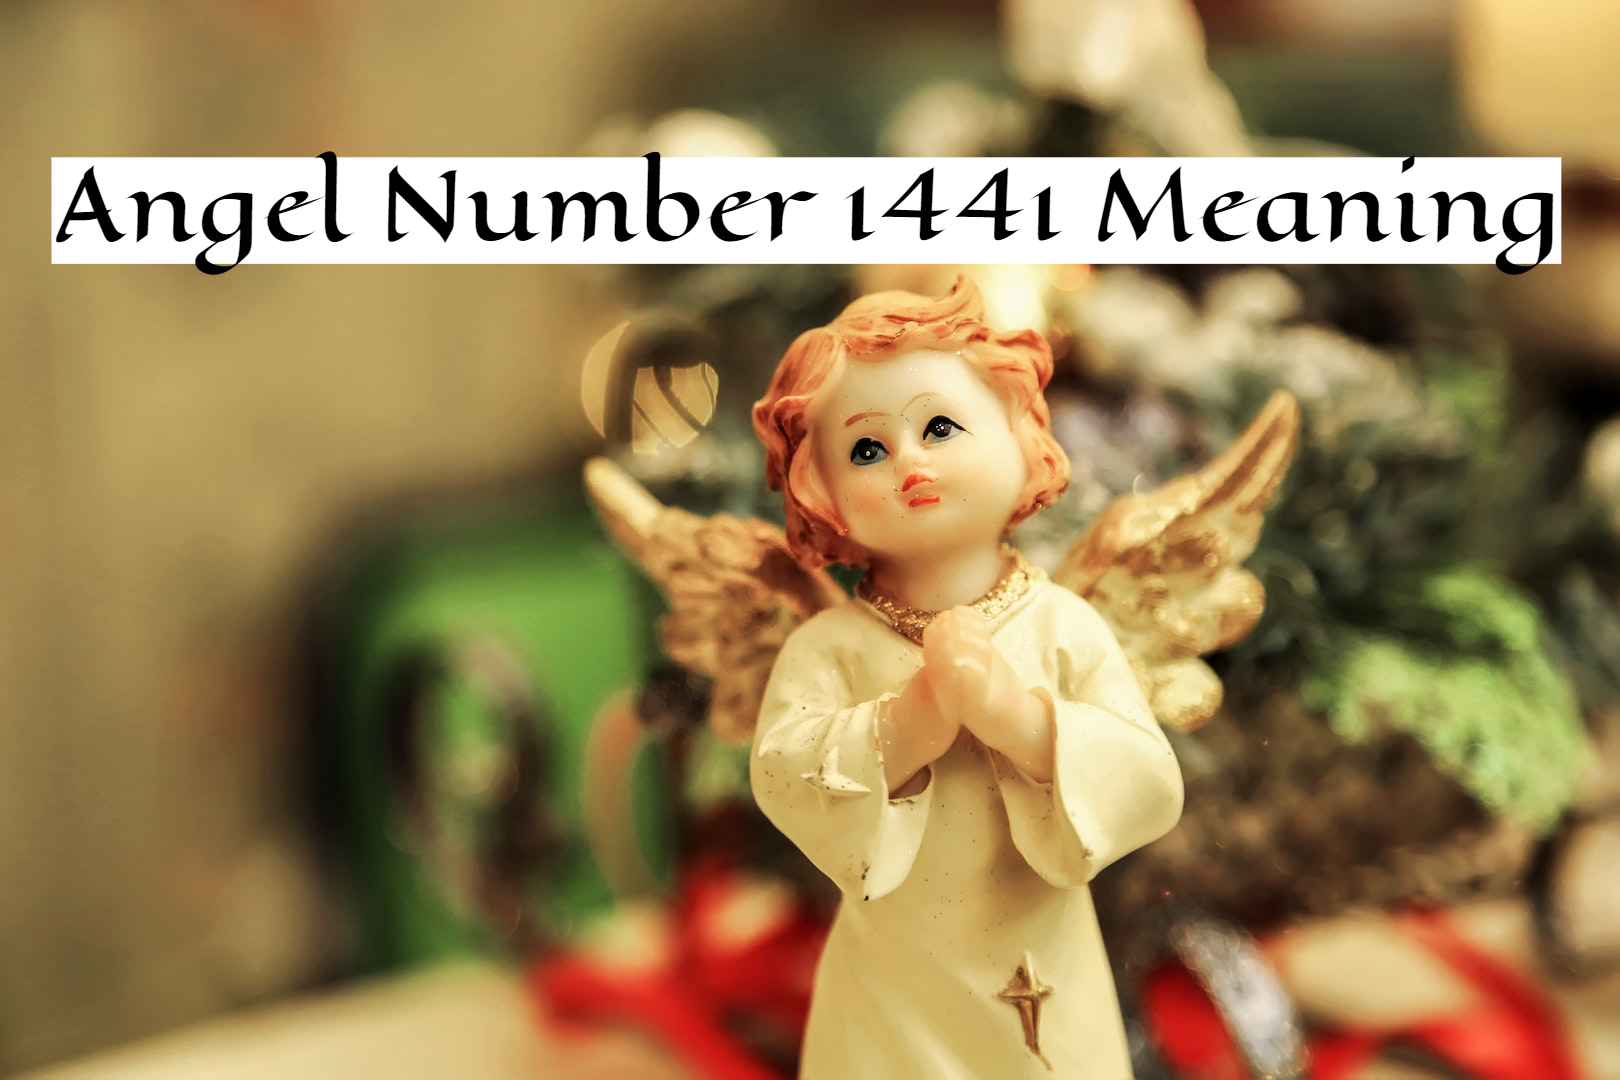 Angel Number 1441 Meaning - Symbolism And Spiritual Interpretation